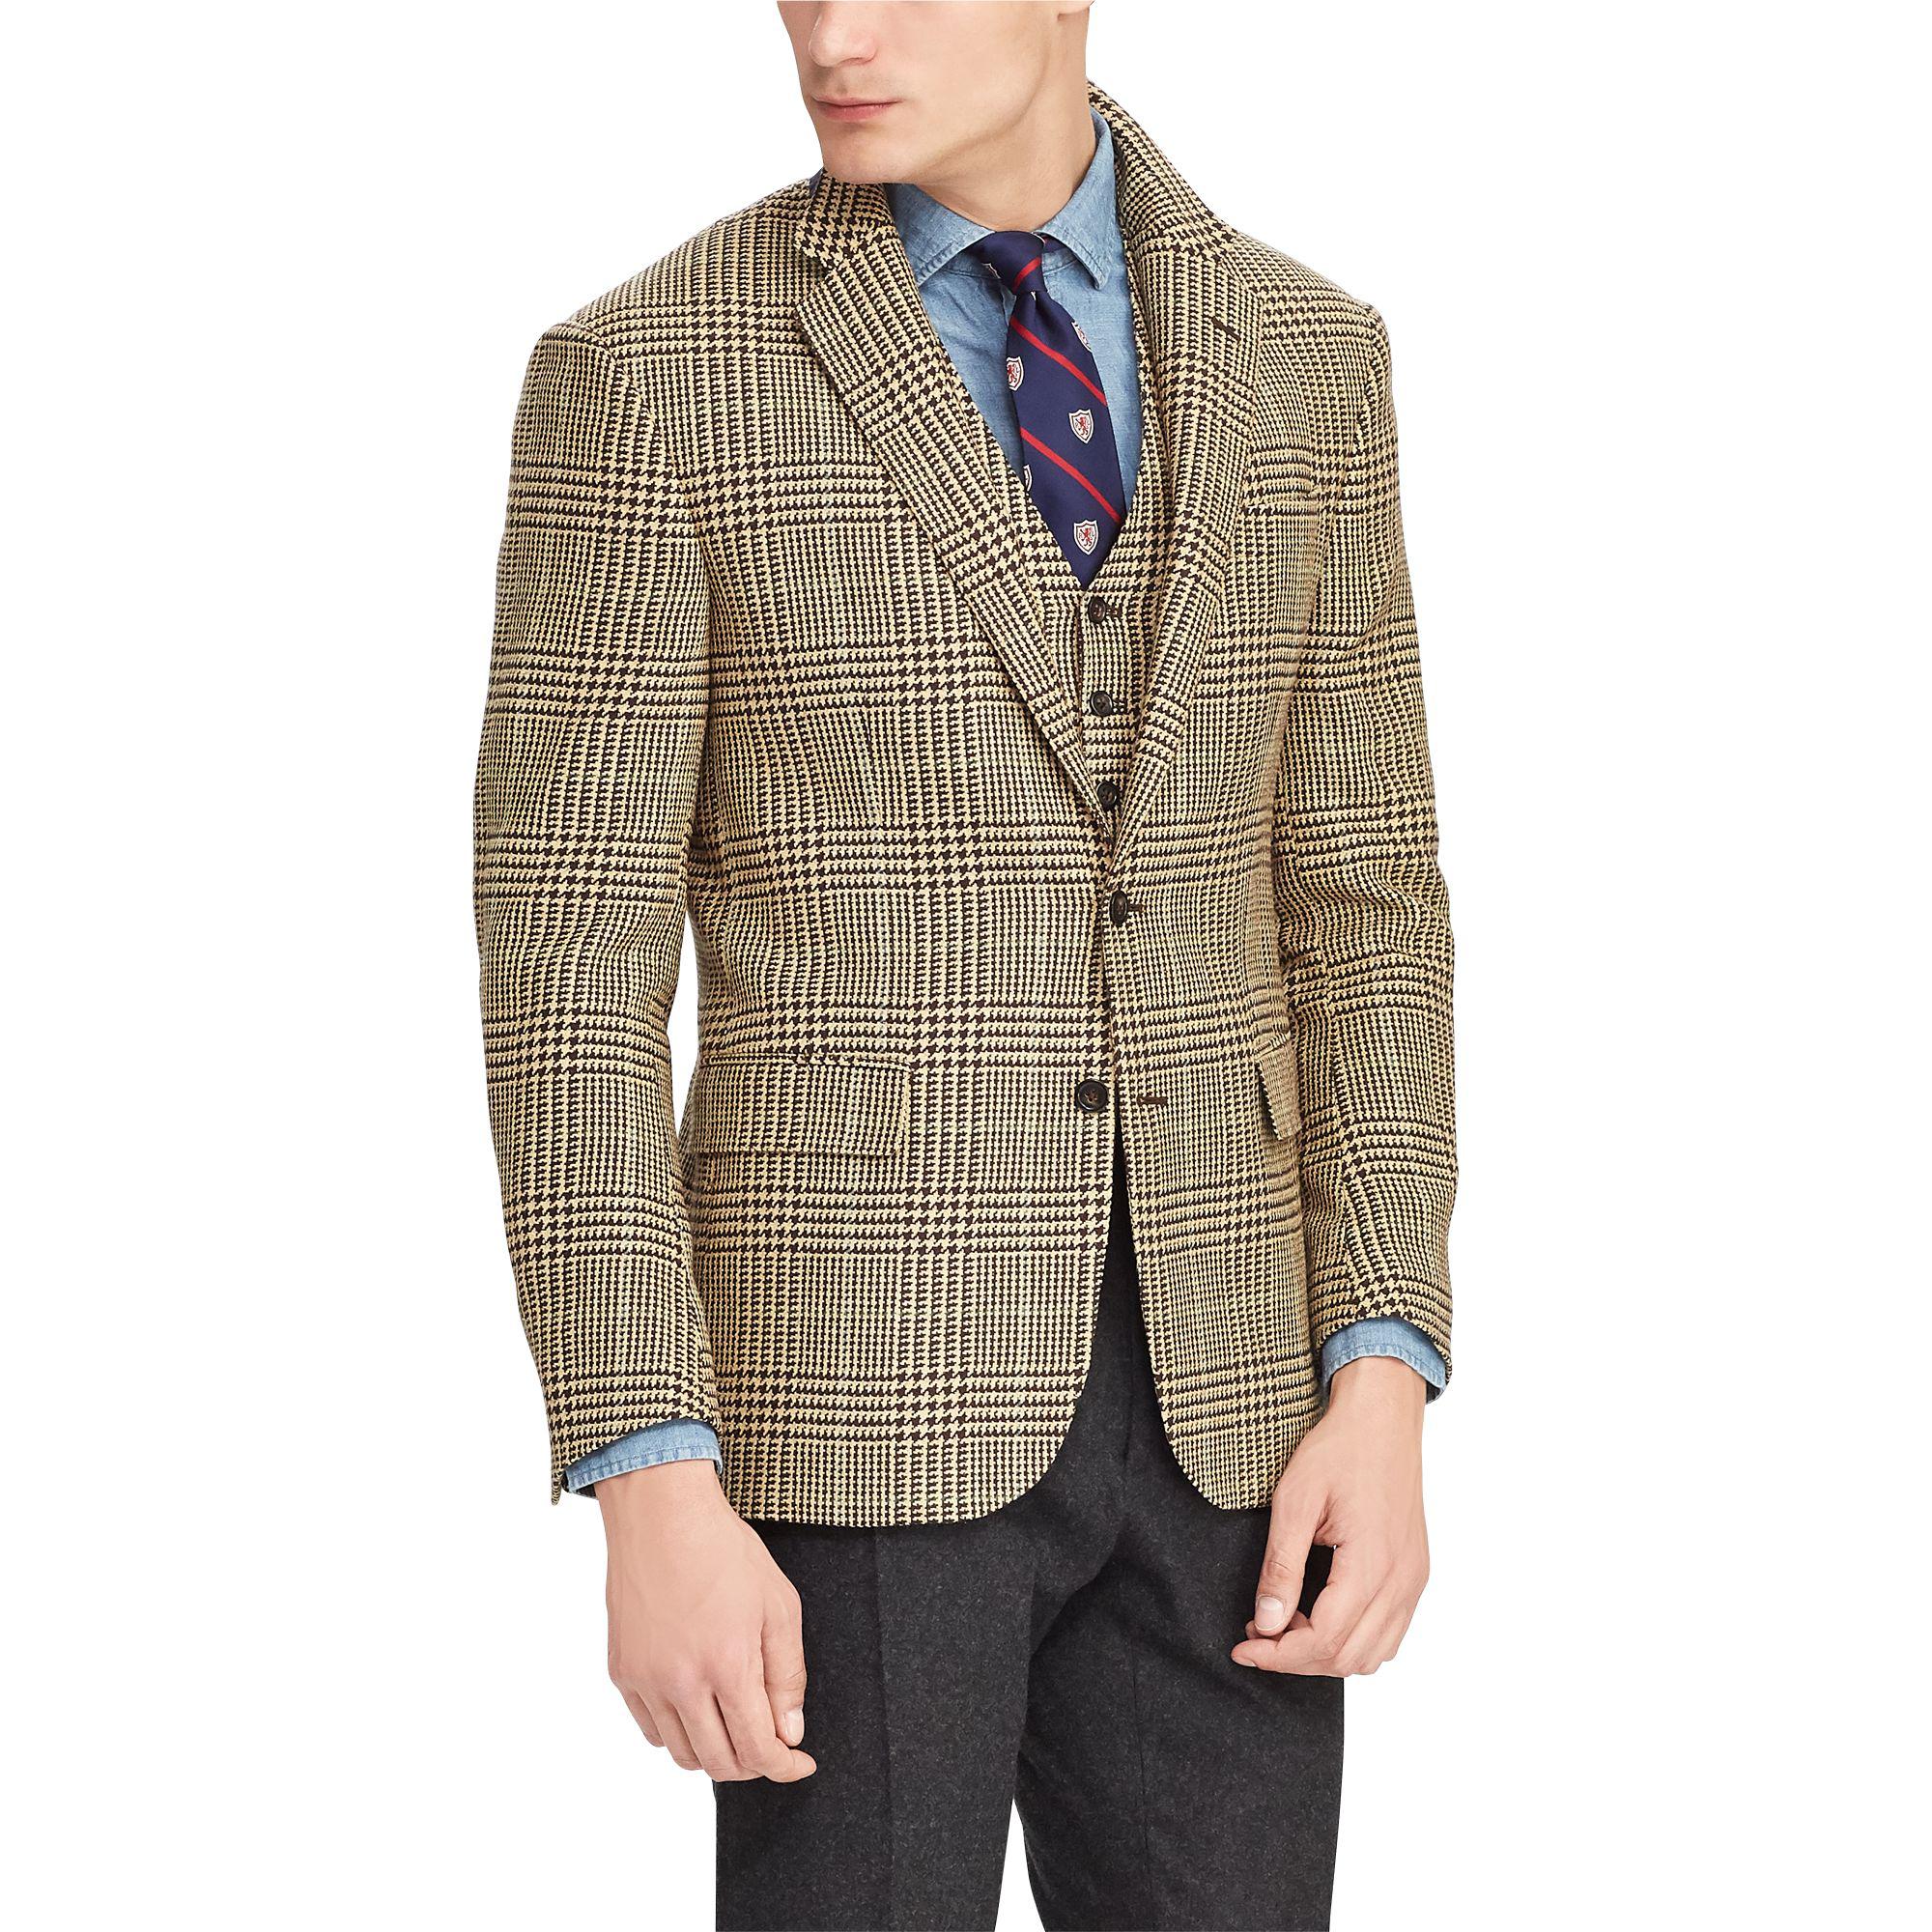 Polo Ralph Lauren Wool Polo Glen Plaid Sport Coat in Brown for Men - Lyst